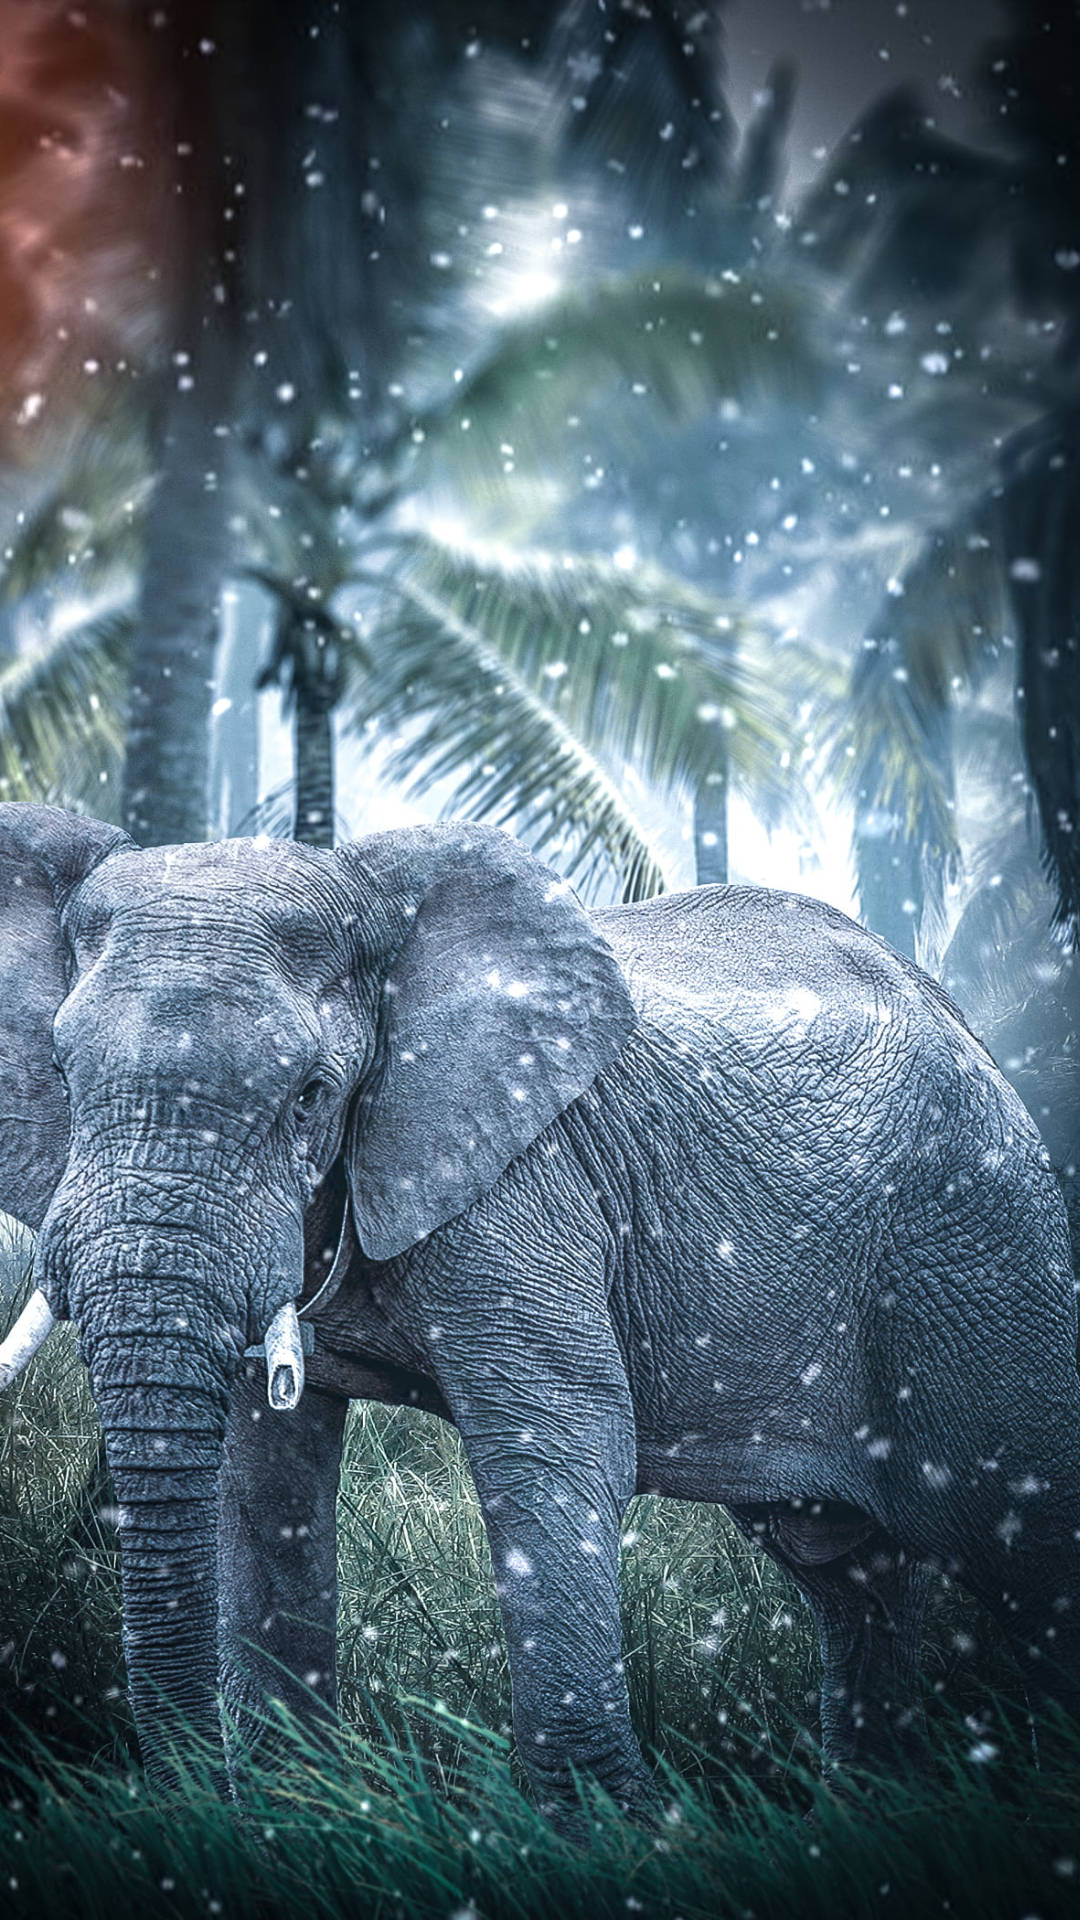 Download Elephant Jungle Iphone Wallpaper 